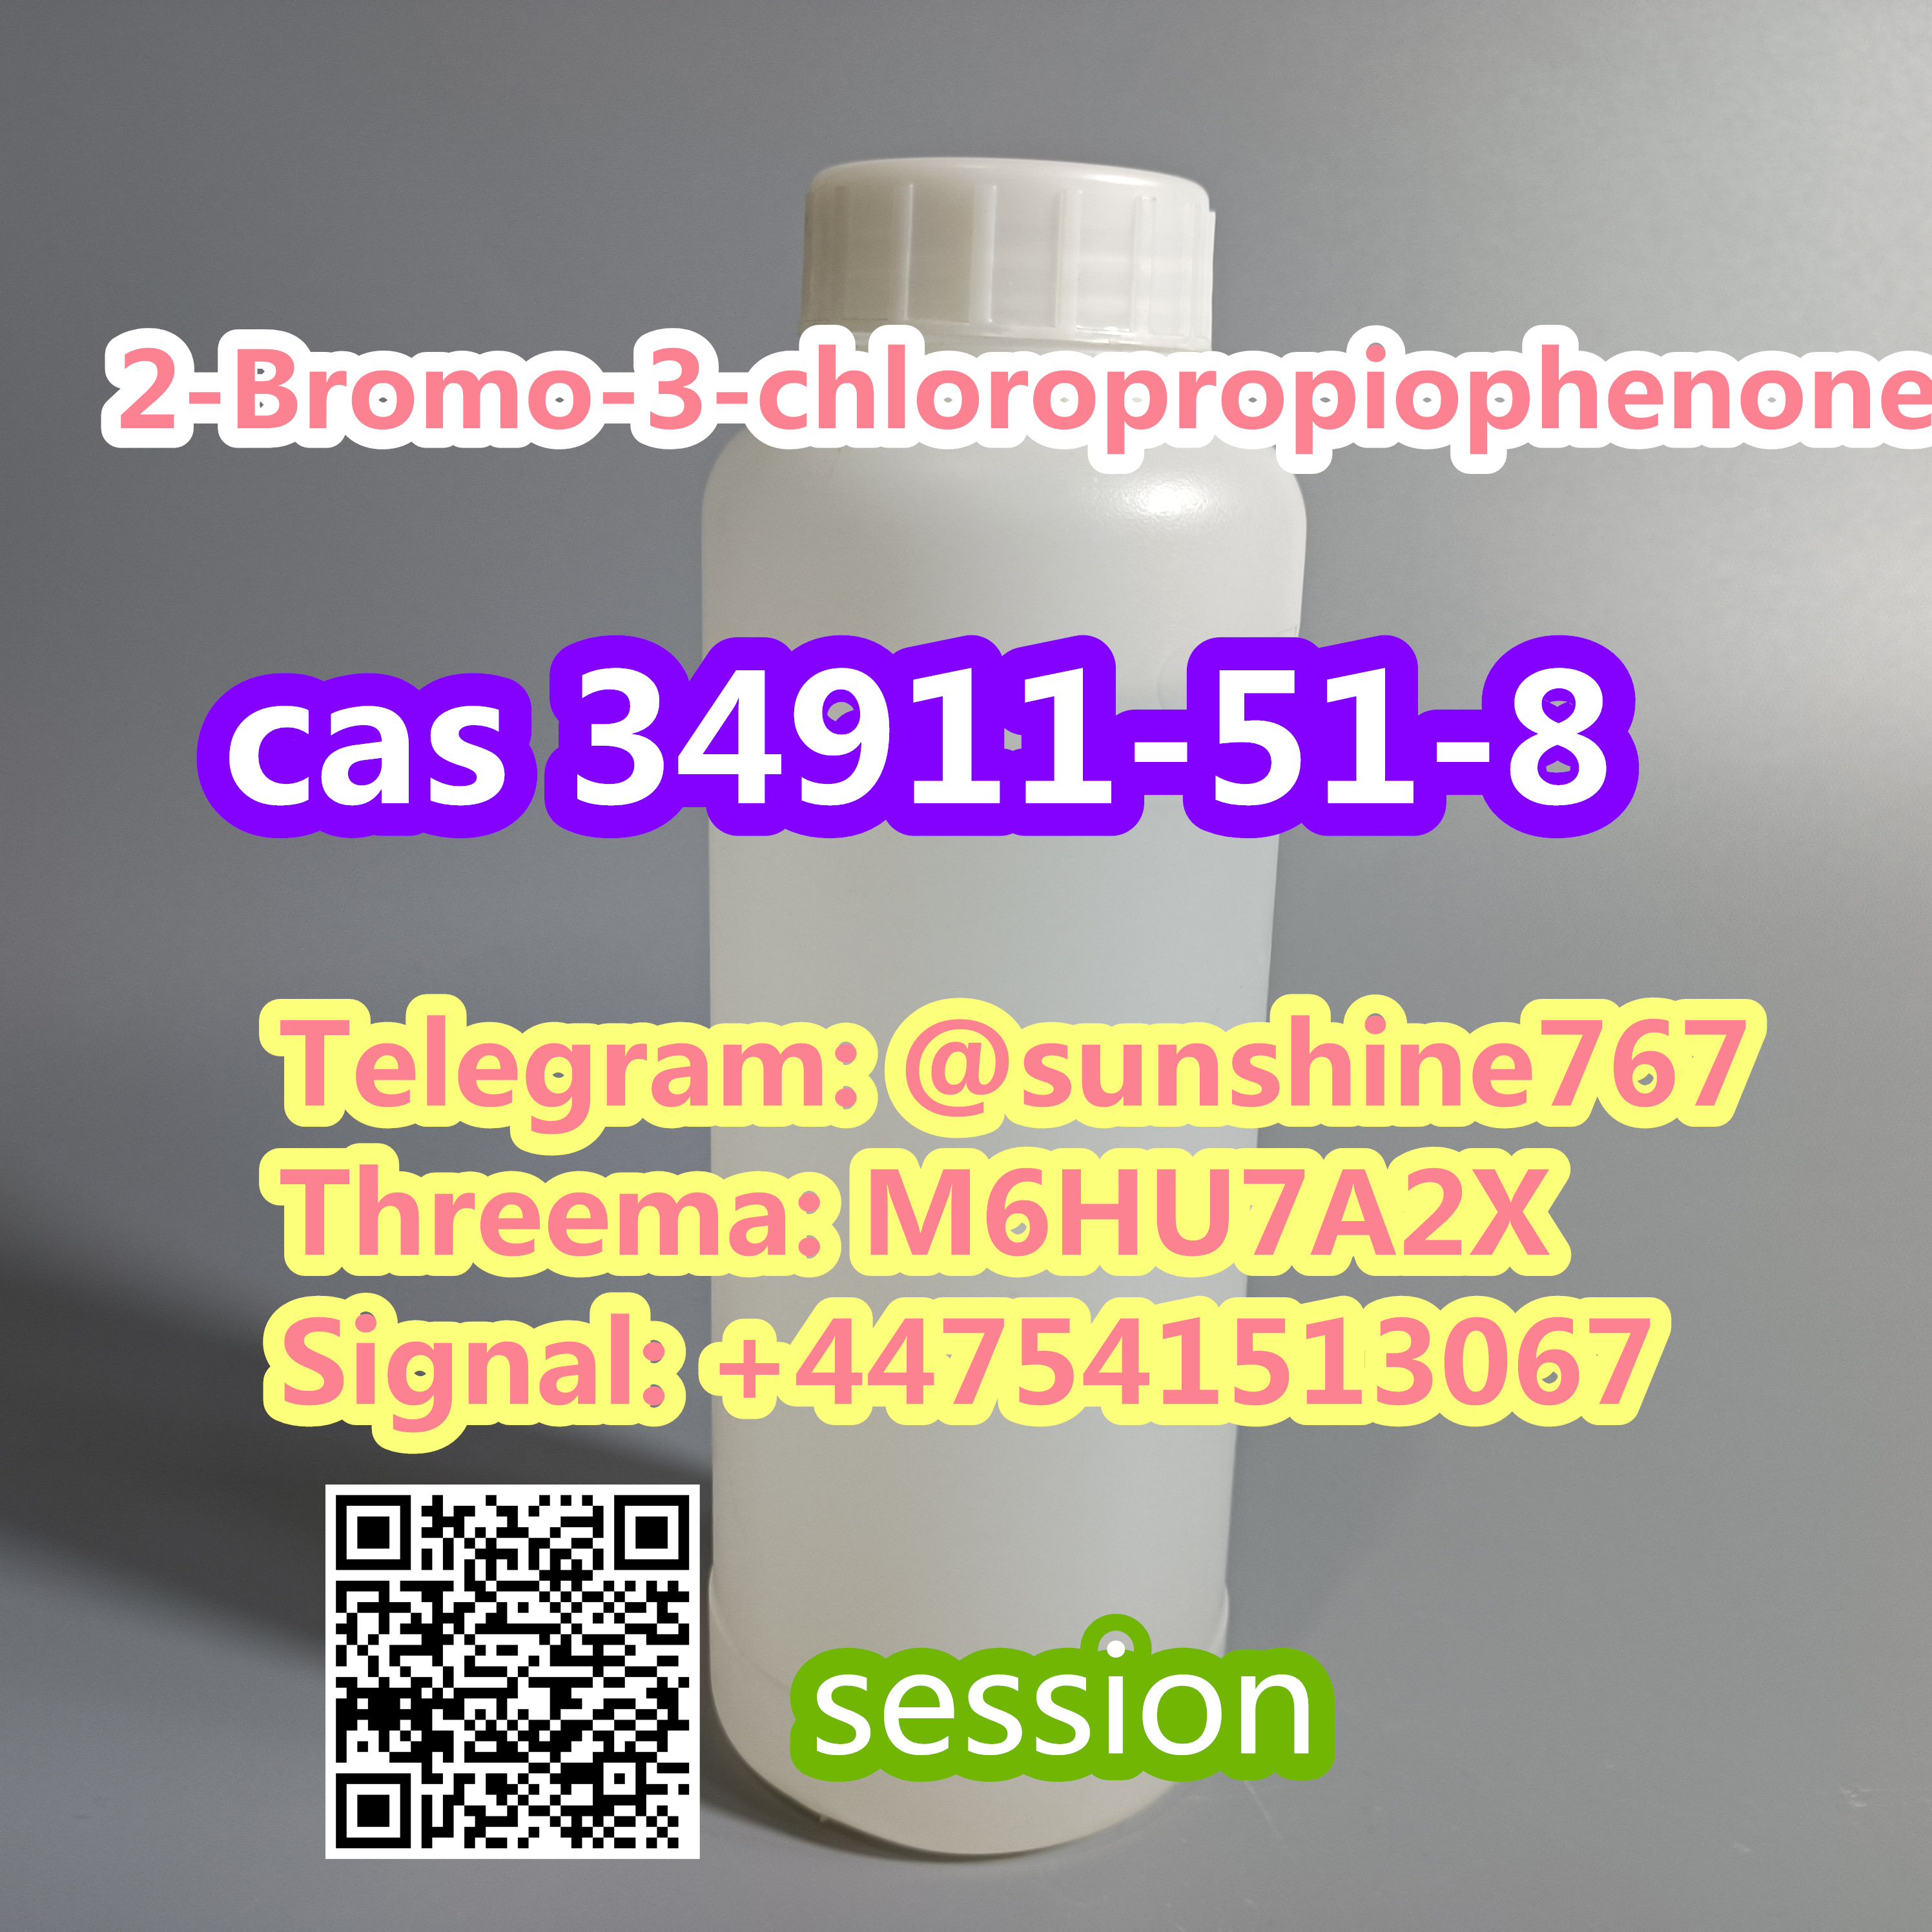 Telegram: @sunshine767 2-Bromo-3'-chloropropiophenone 2b3c cas 34911-51-8 รูปที่ 1